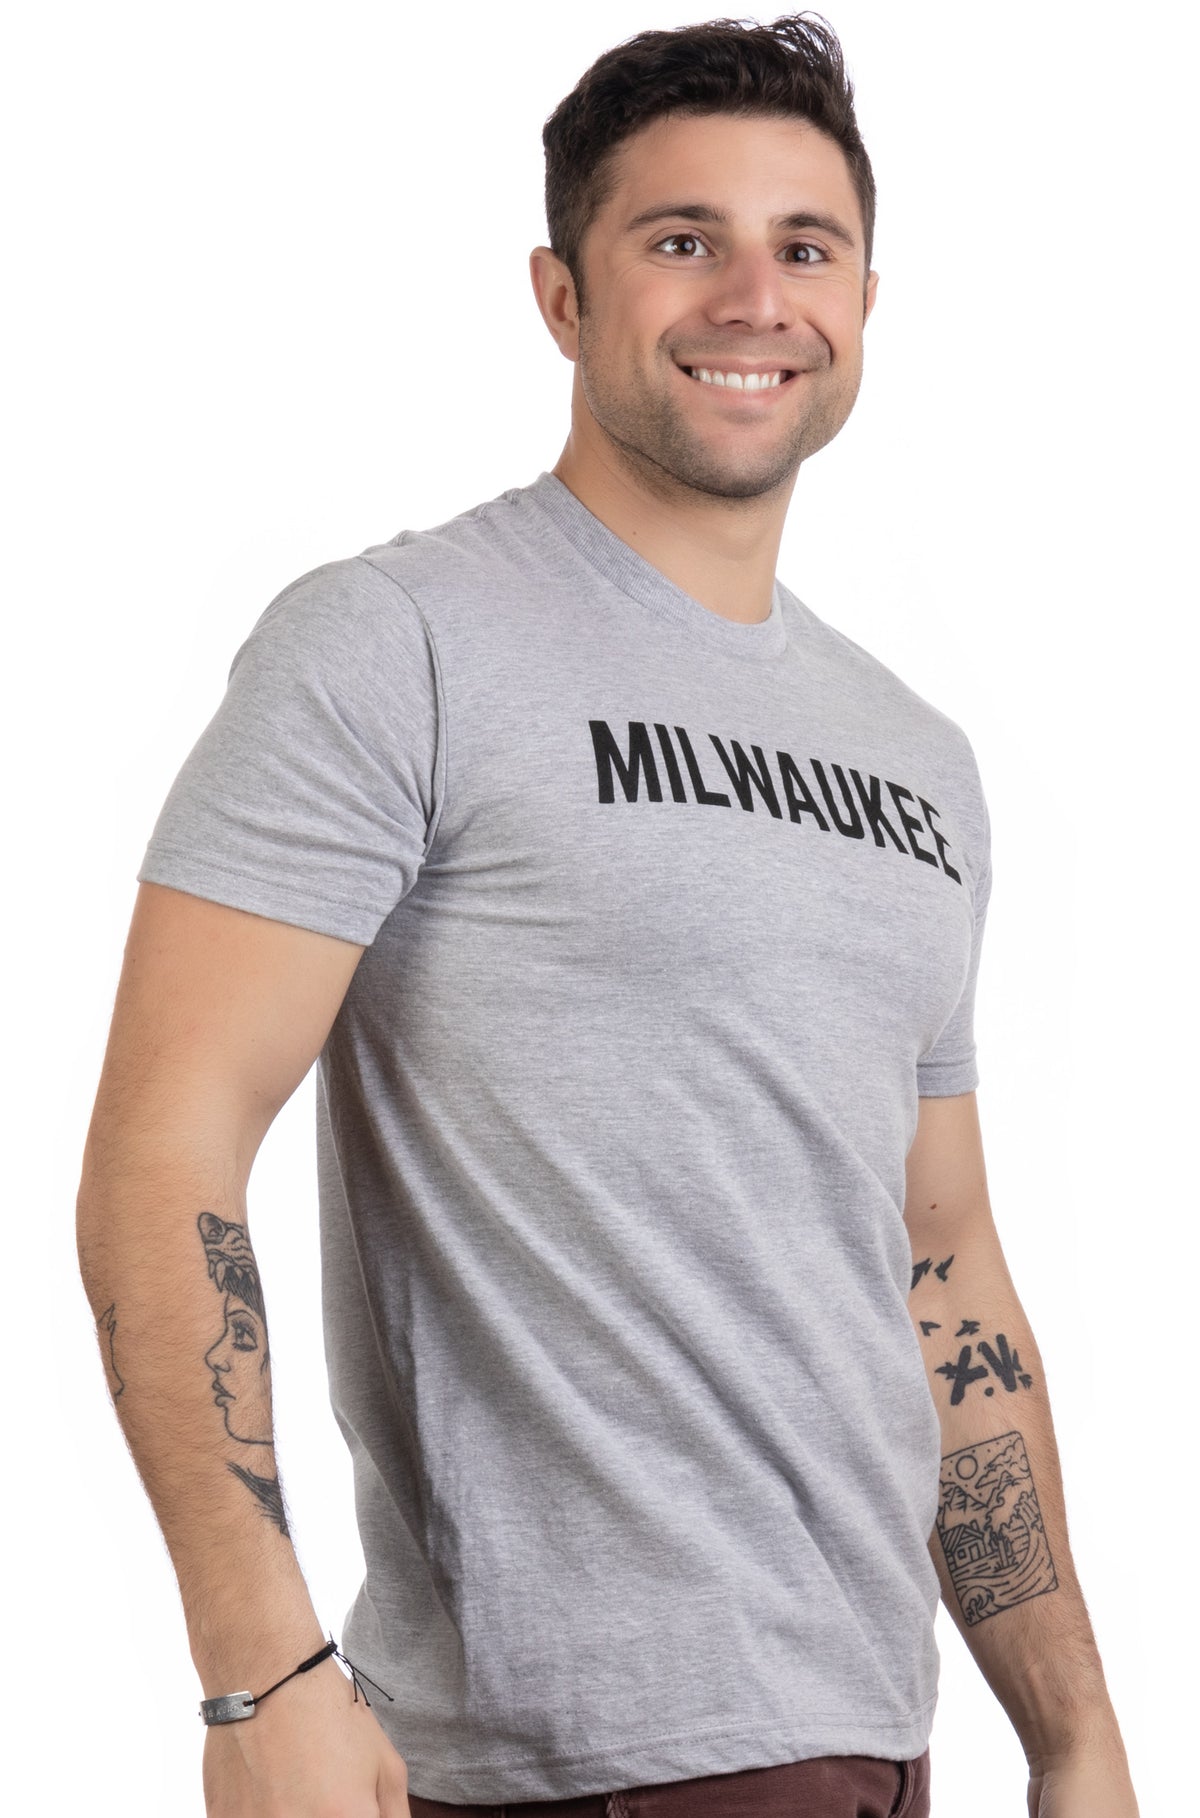 MILWAUKEE | Classic Retro City Grey Wisconsin Beer Brew Pride Men Women T-shirt